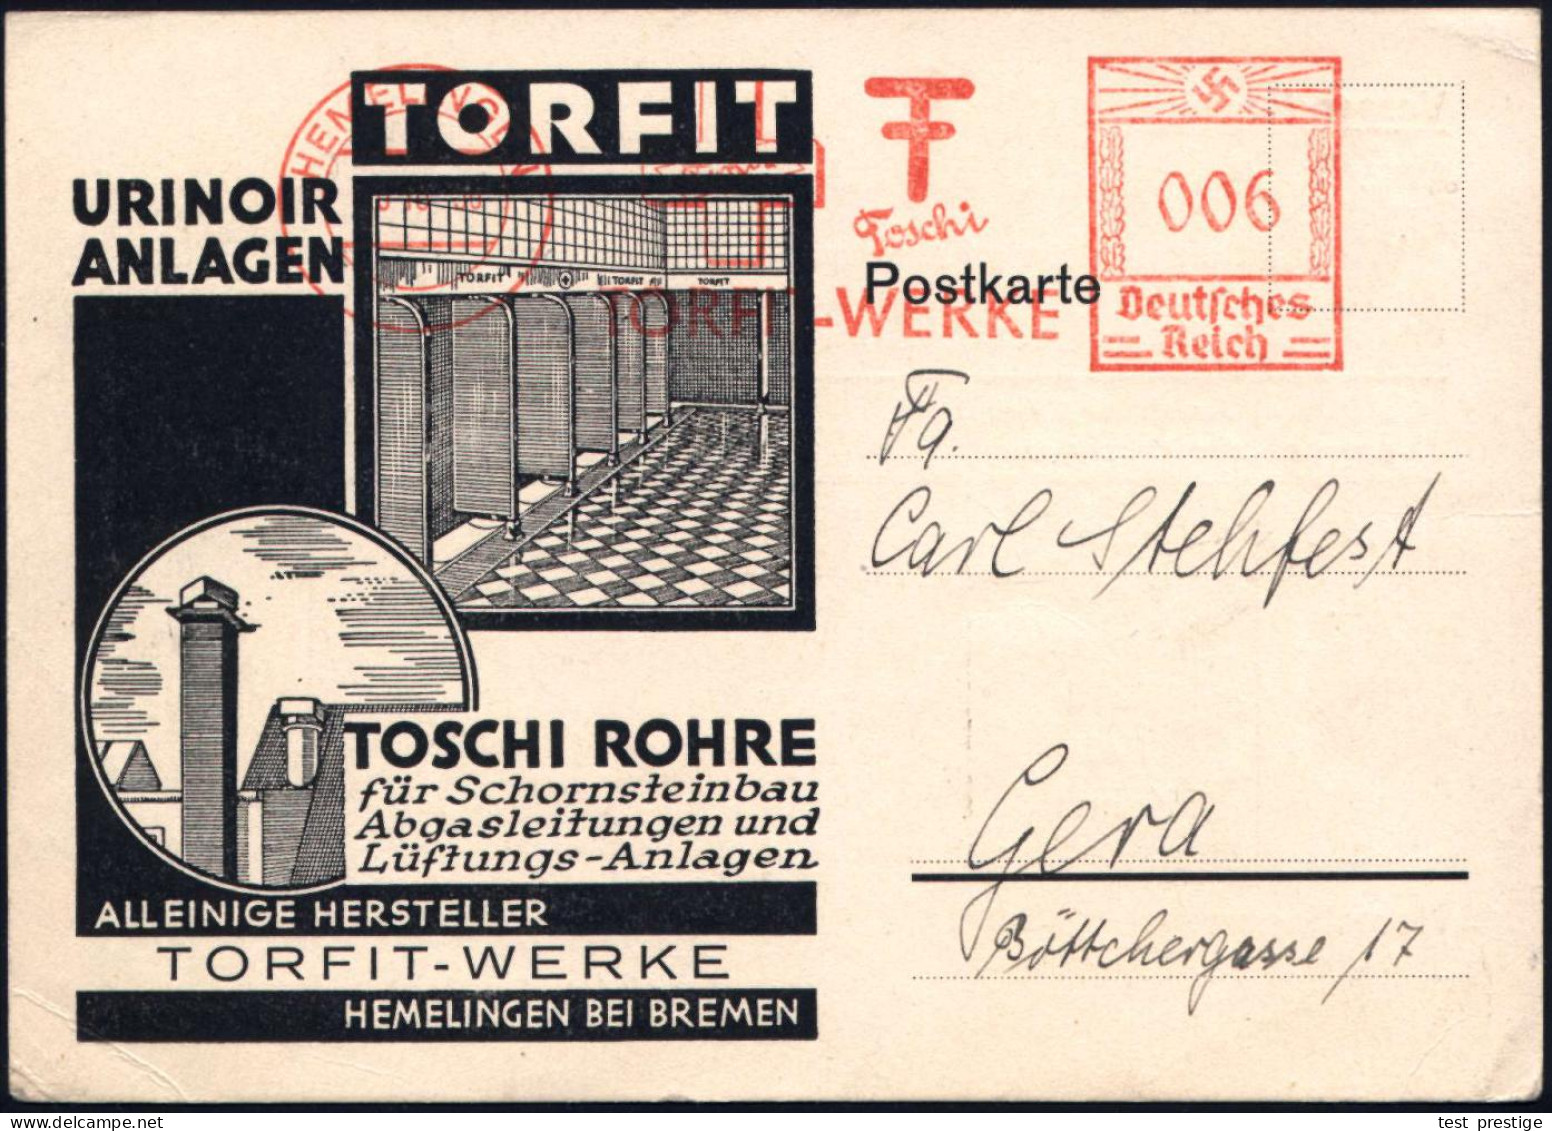 HEMELINGEN/ Toschi/ TORFIT-WERKE 1936 (16.10.) AFS Francotyp (Monogr.) Dekorative Reklame-Kt.: Urinoir, Schornstein-Abga - Bombero